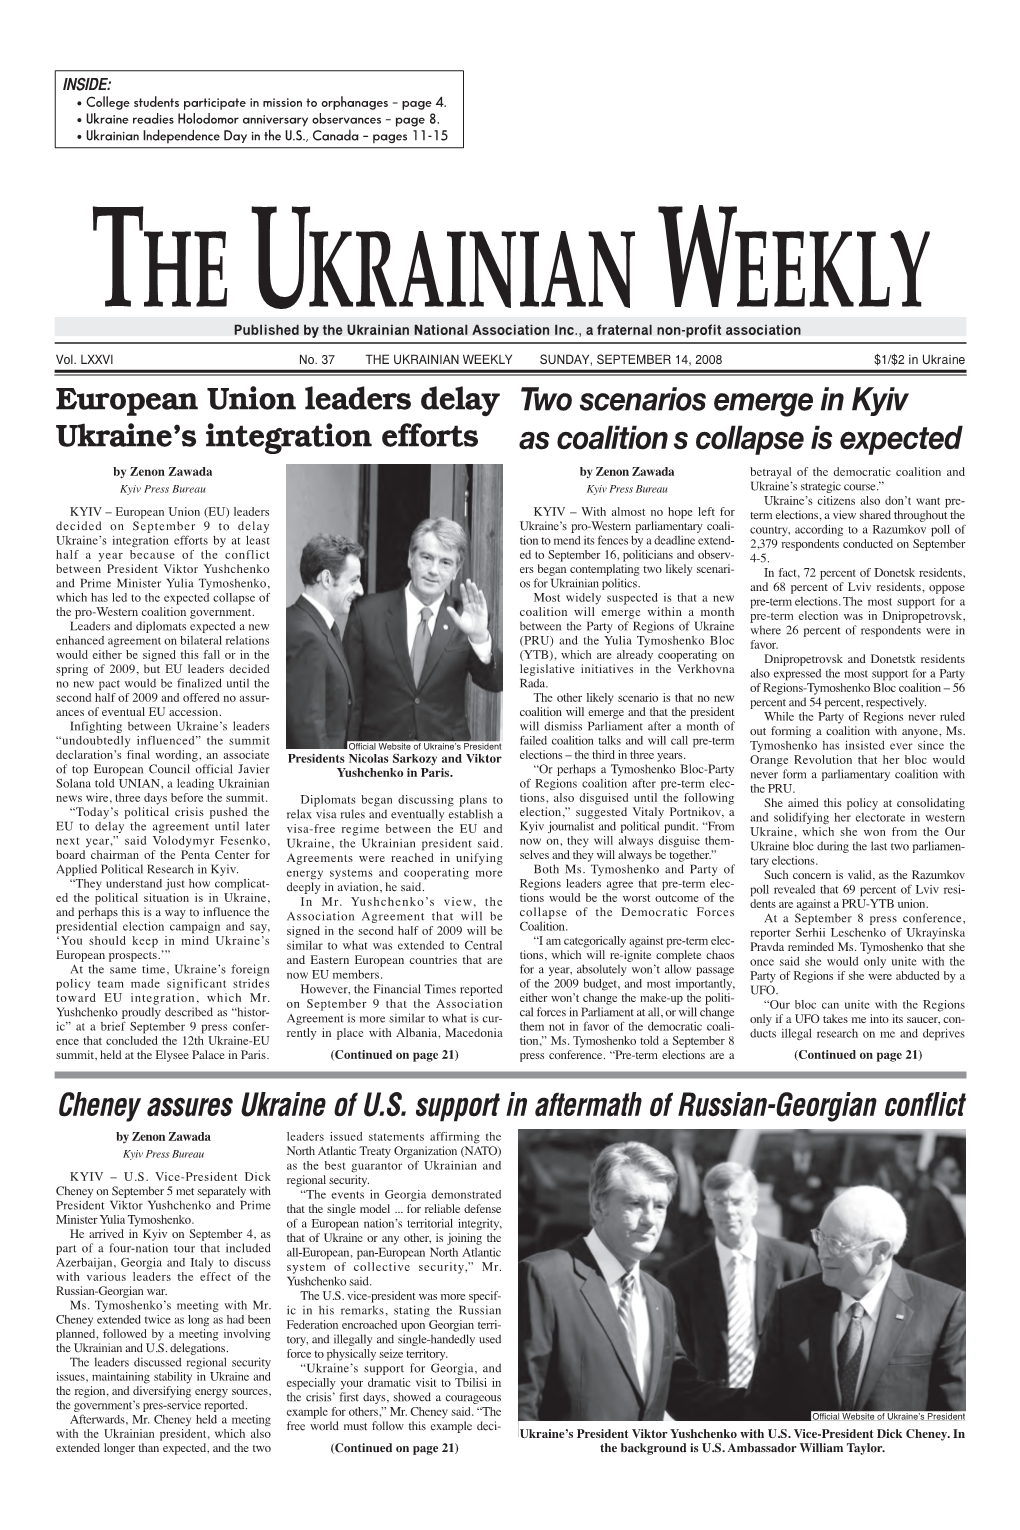 The Ukrainian Weekly 2008, No.37